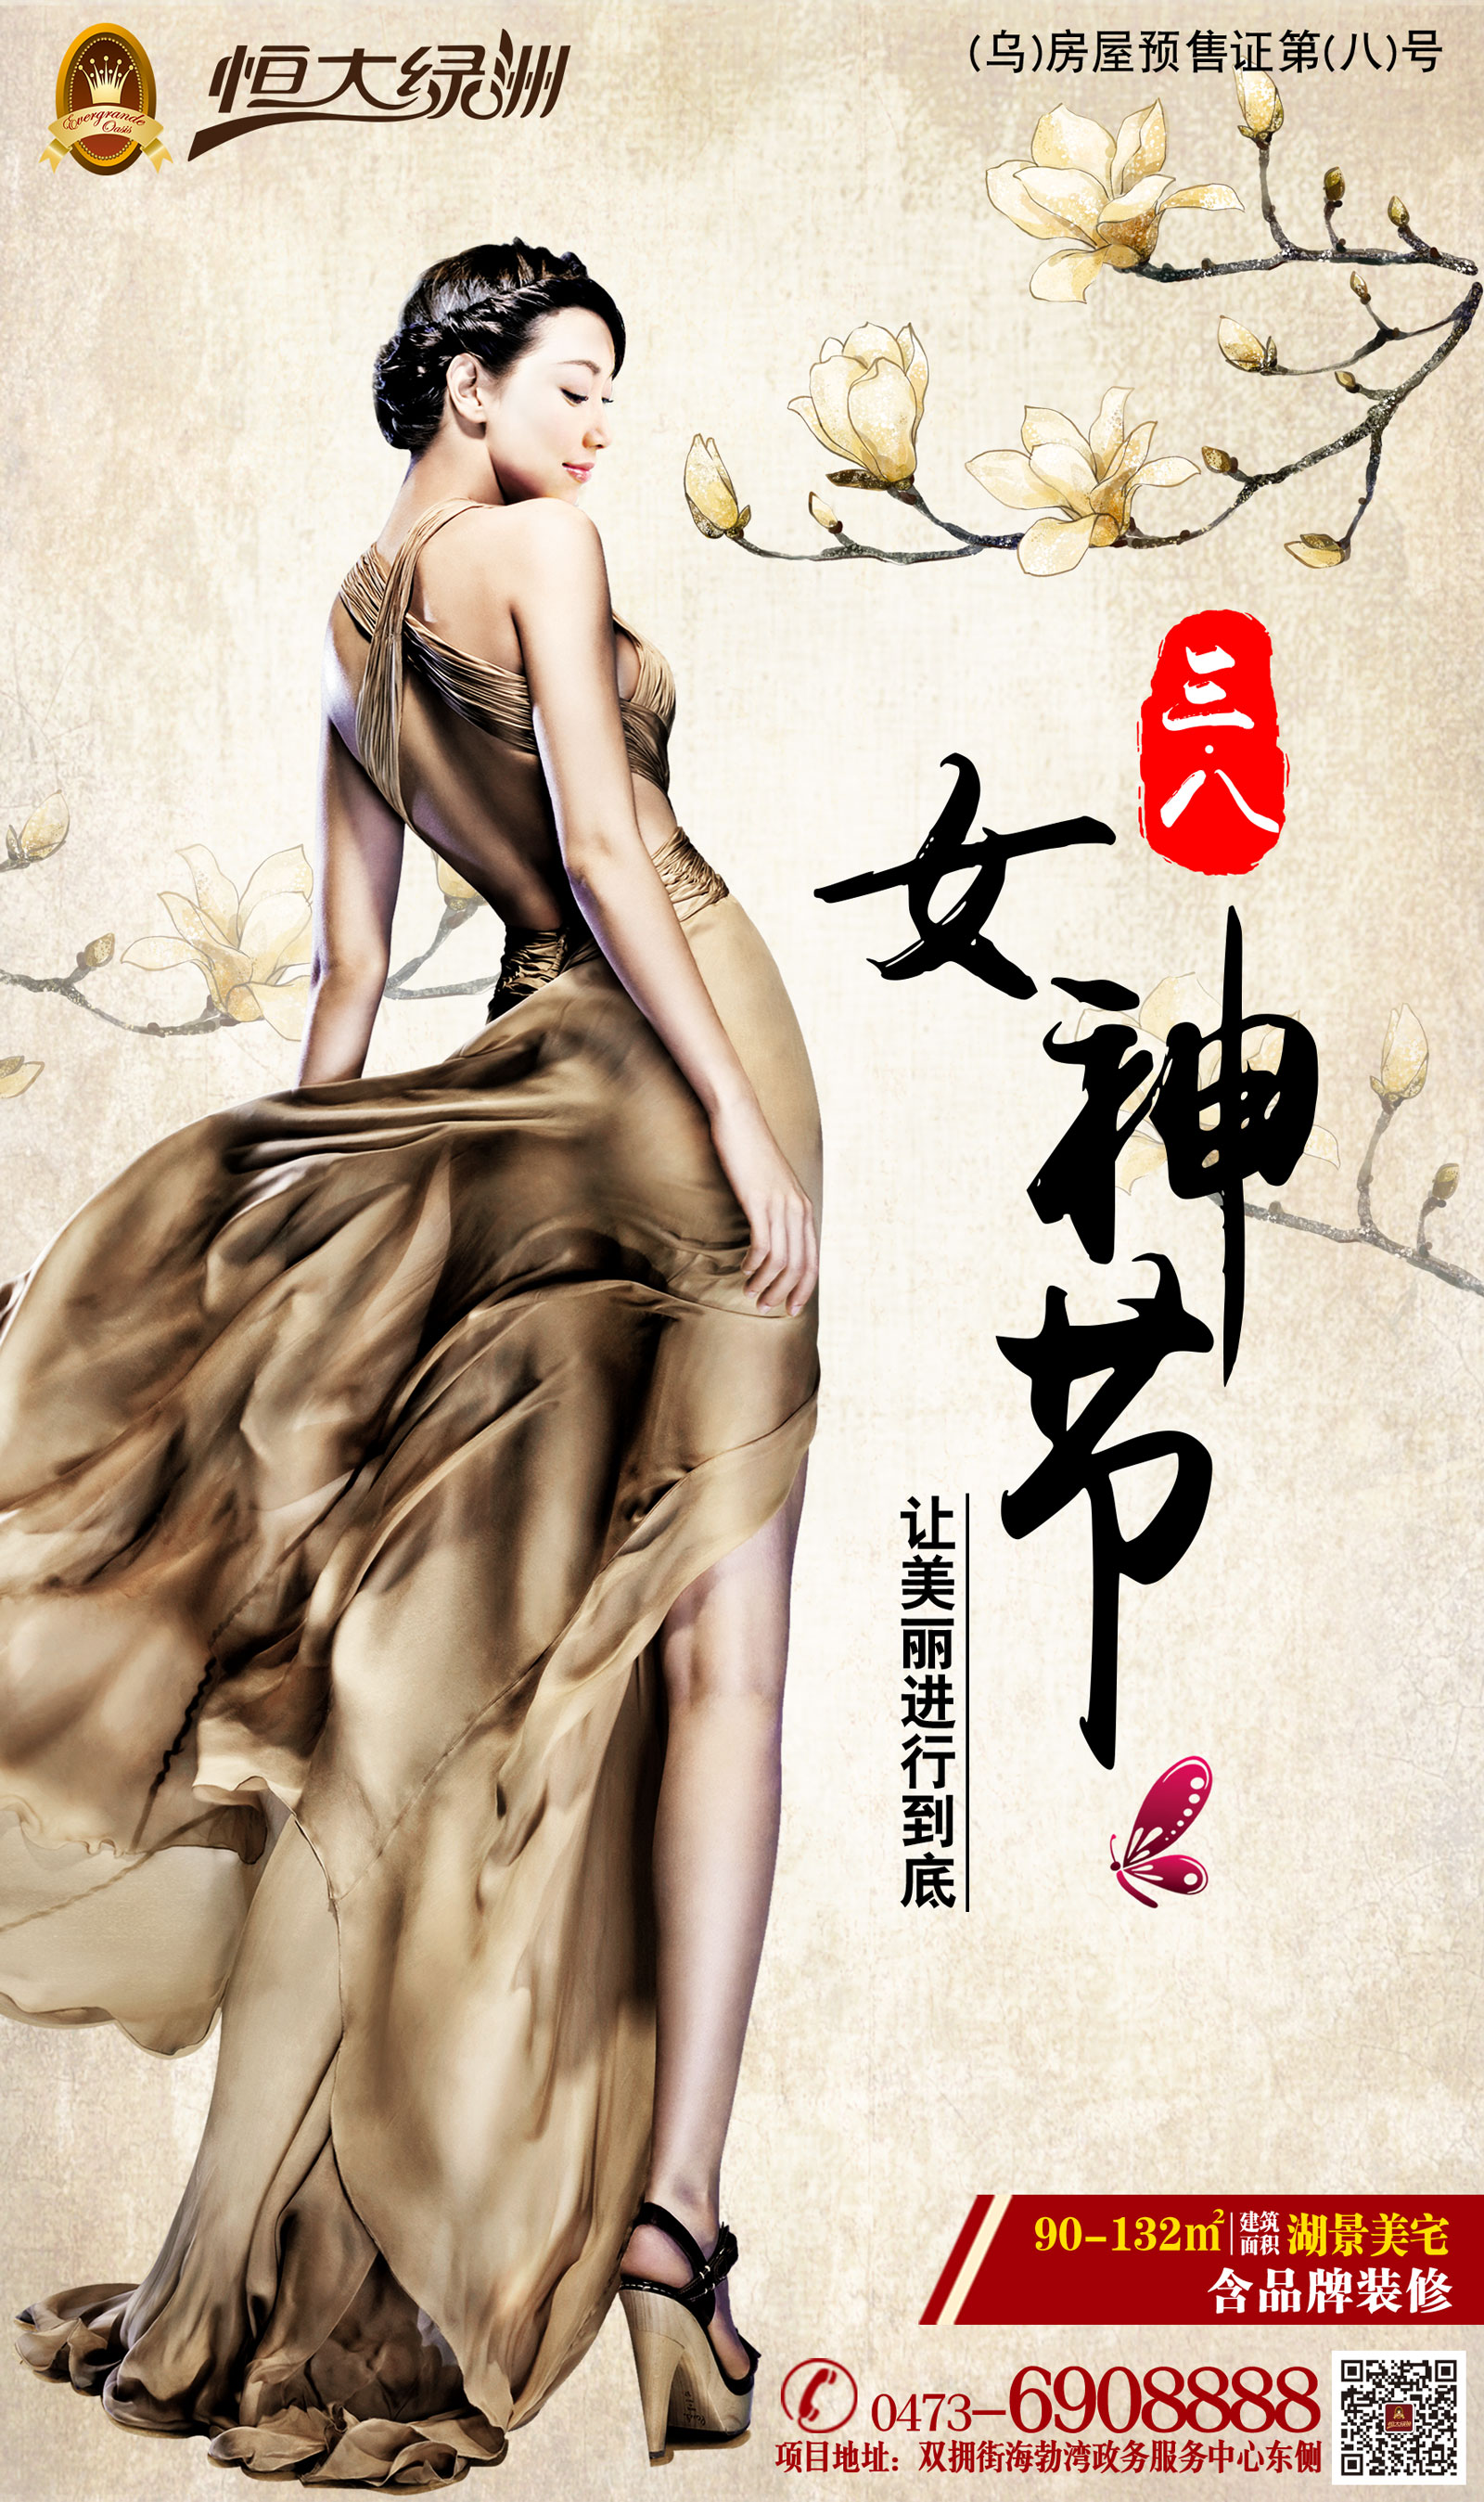 Beautiful goddess festivals - China PSD File Free Download